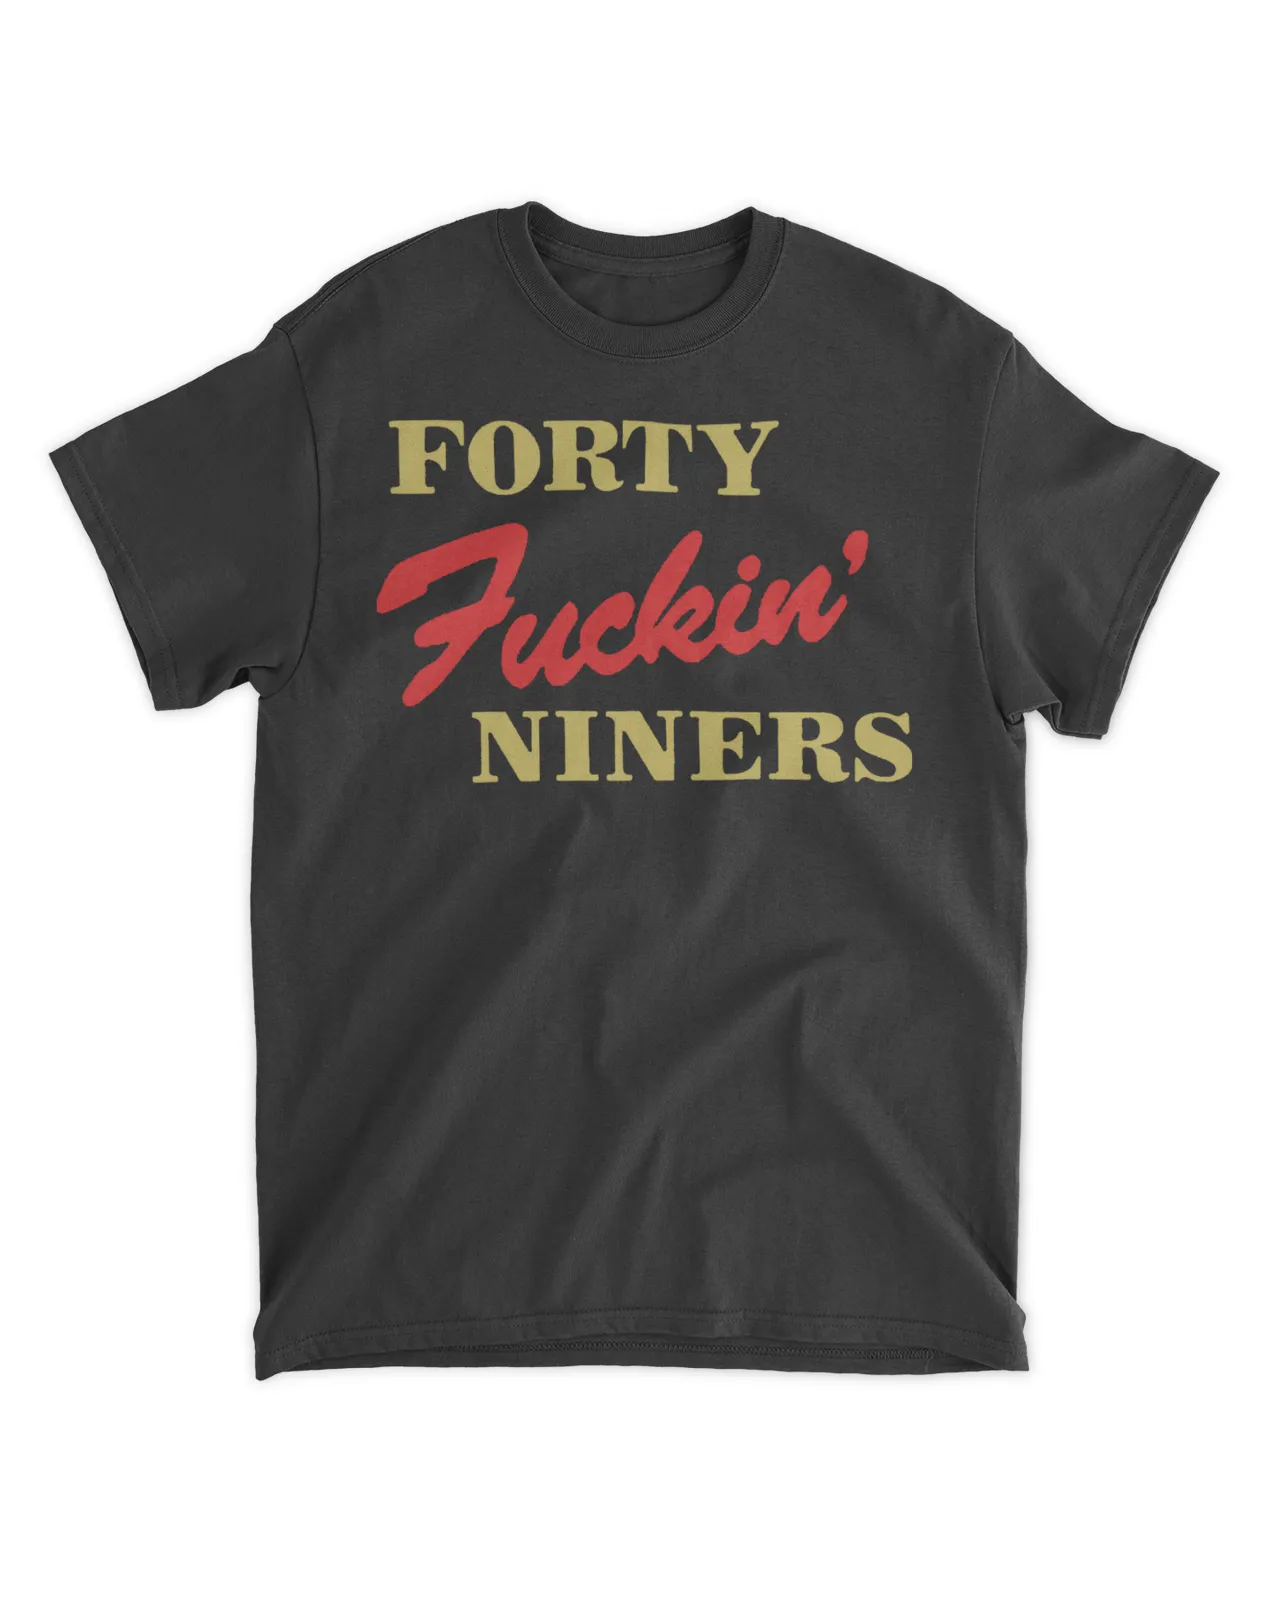  Forty fuckin niner shirt